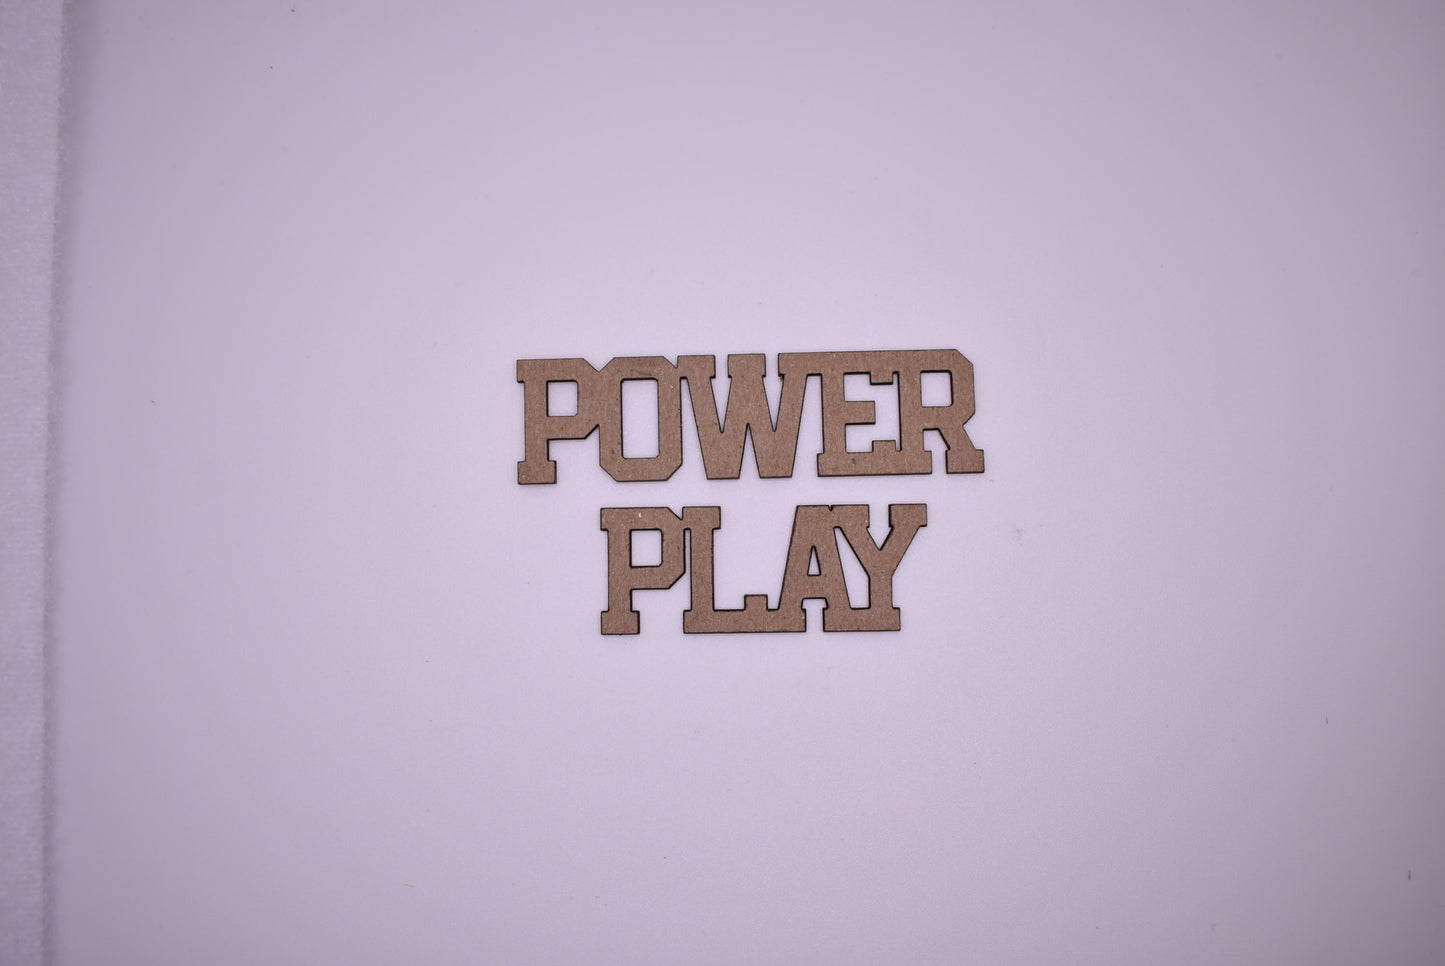 Power play - Creative Designs By Kari